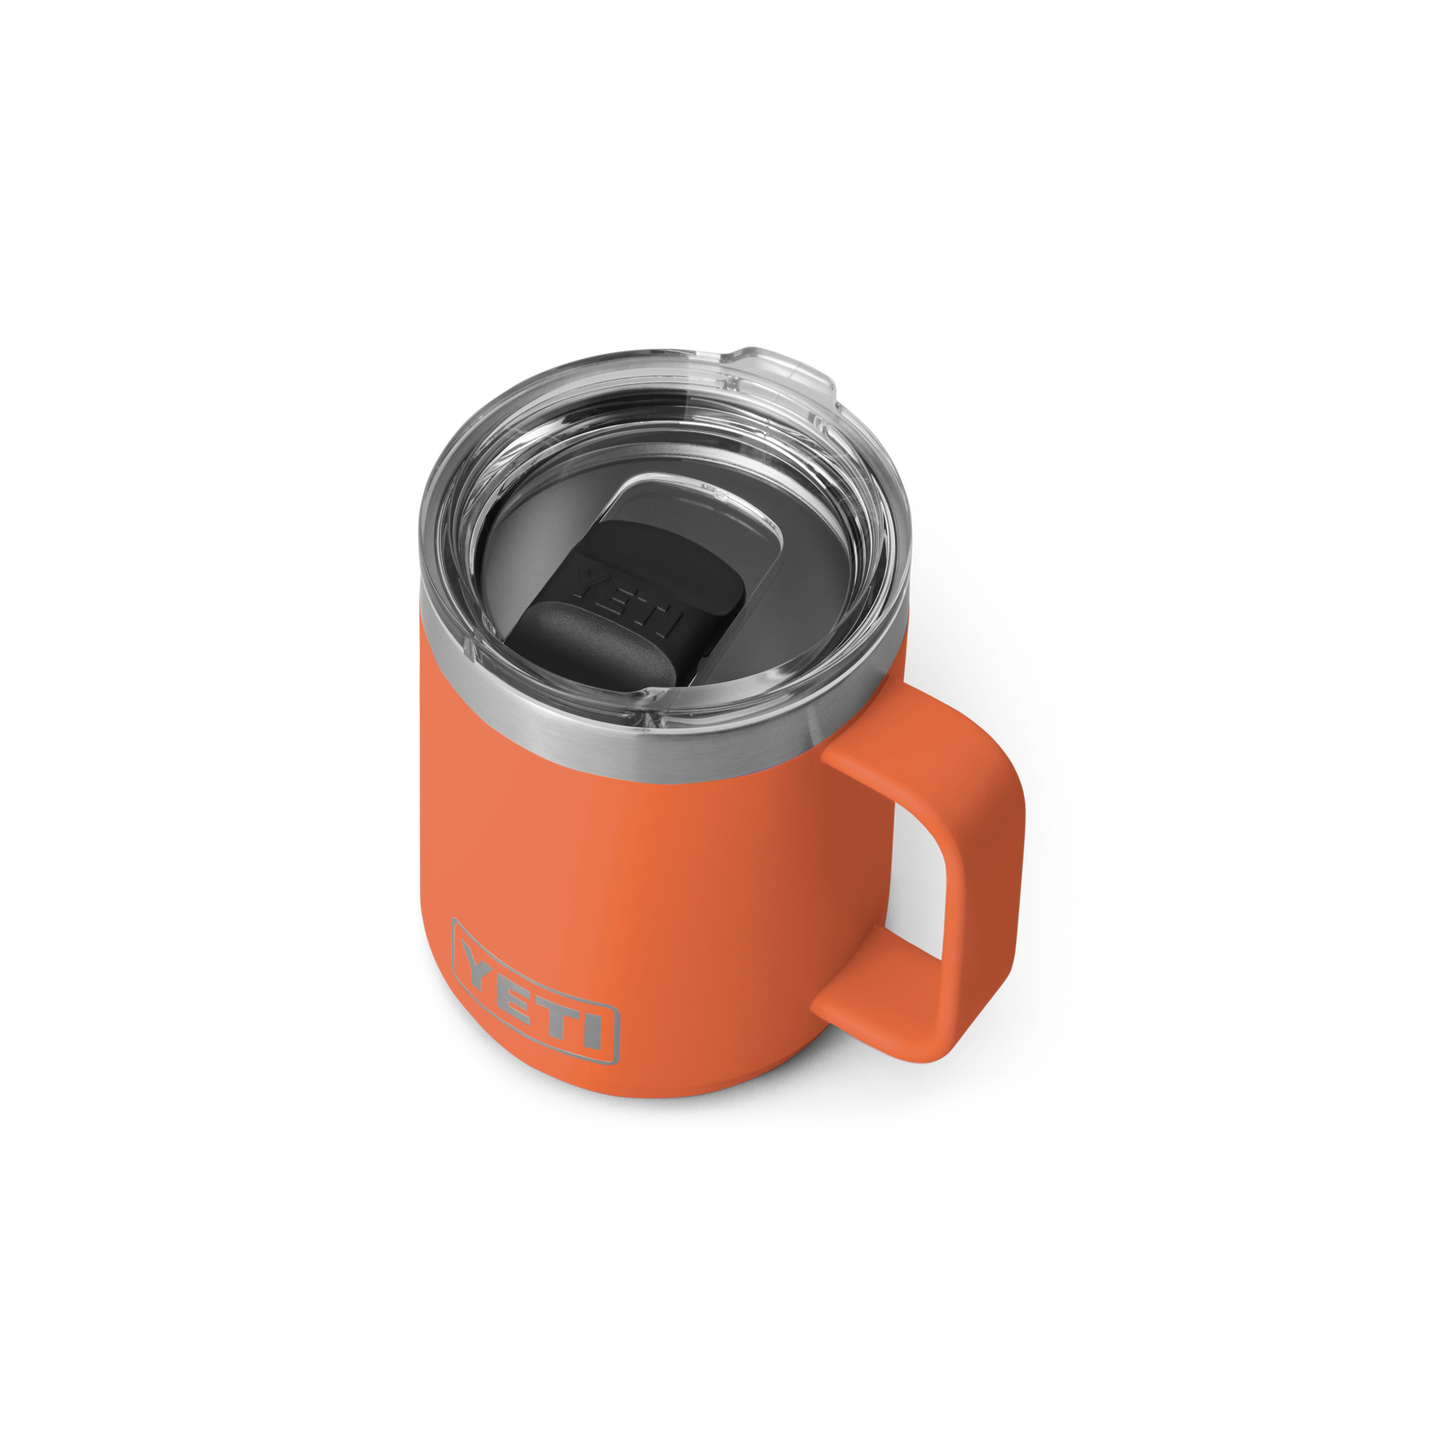 YETI Rambler® 10 oz (296 ml) Mug High Desert Clay